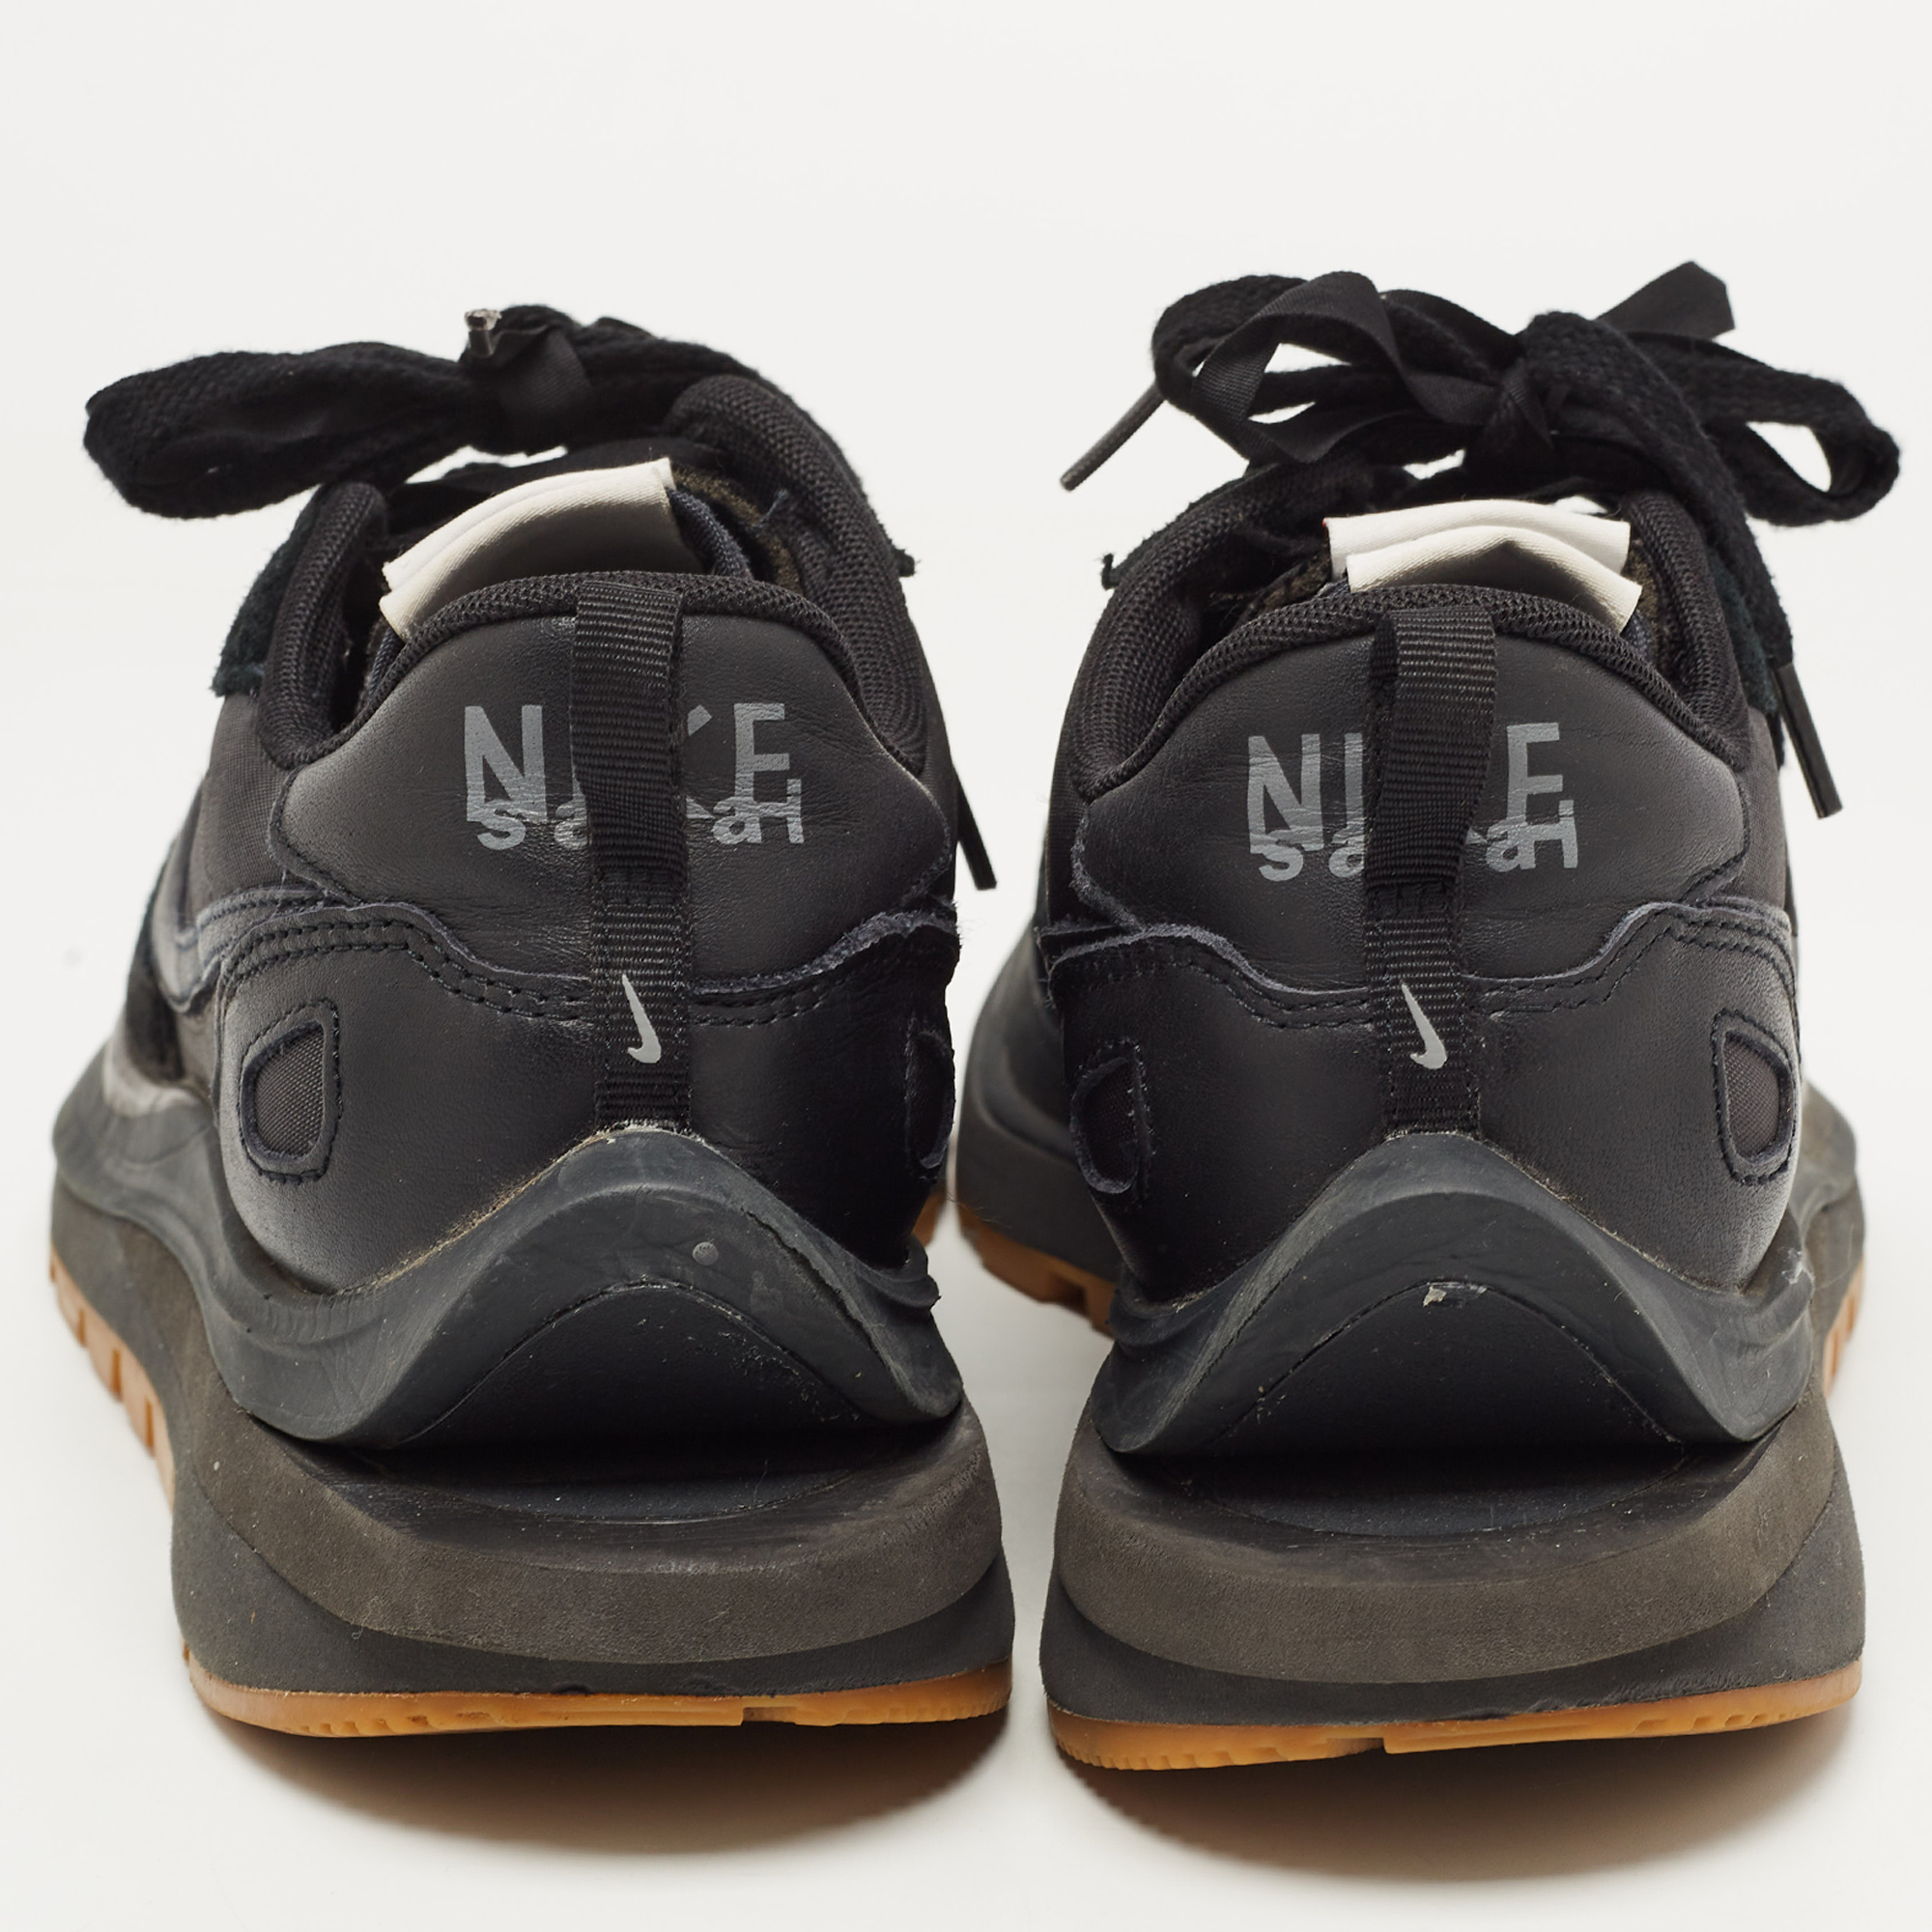 SACAI X Nike Vaporwaffle Black Nylon And Suede Gum Athletic Sneakers Size 43